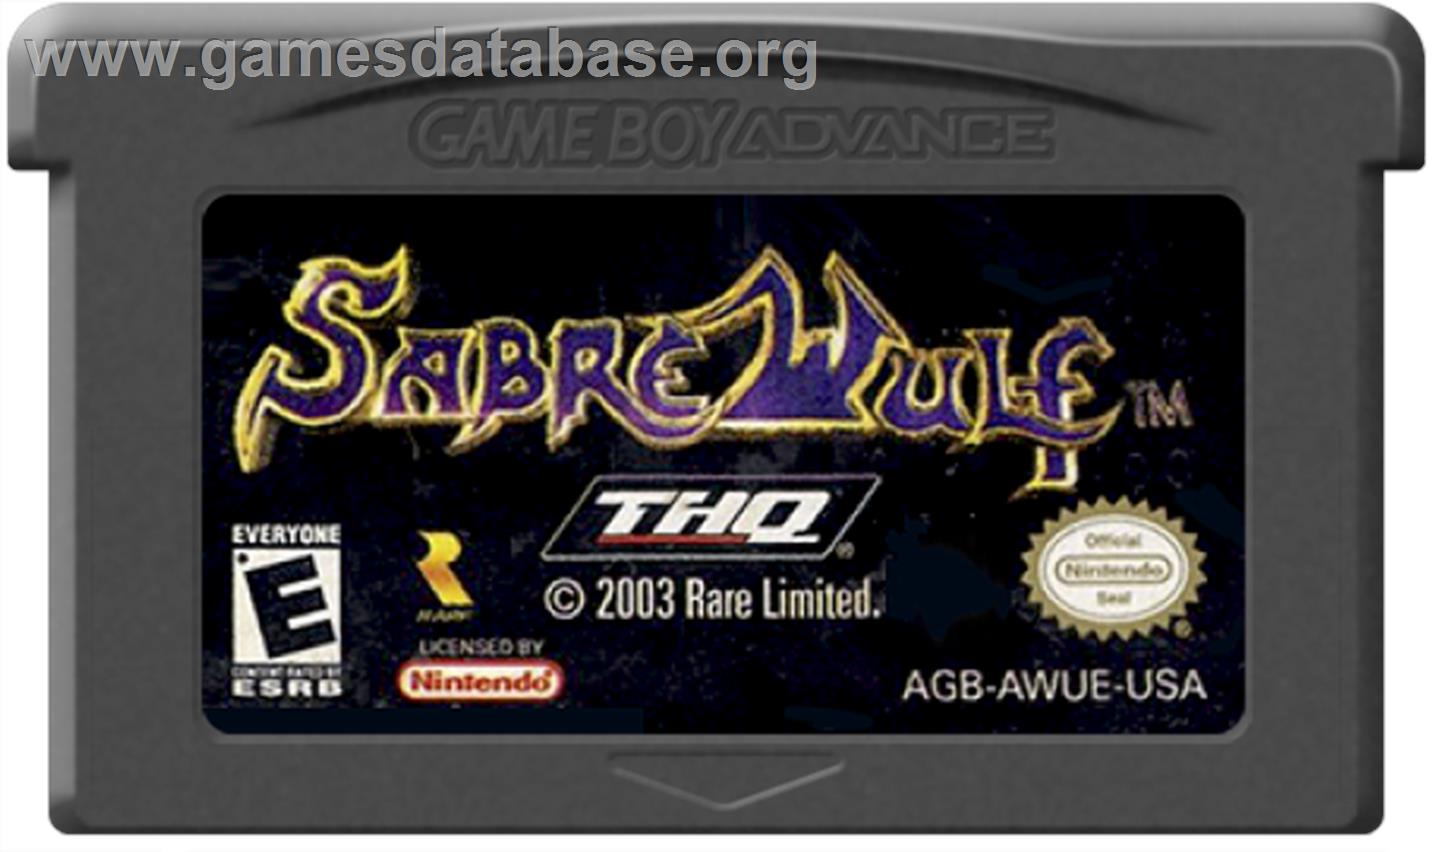 Sabre Wulf - Nintendo Game Boy Advance - Artwork - Cartridge